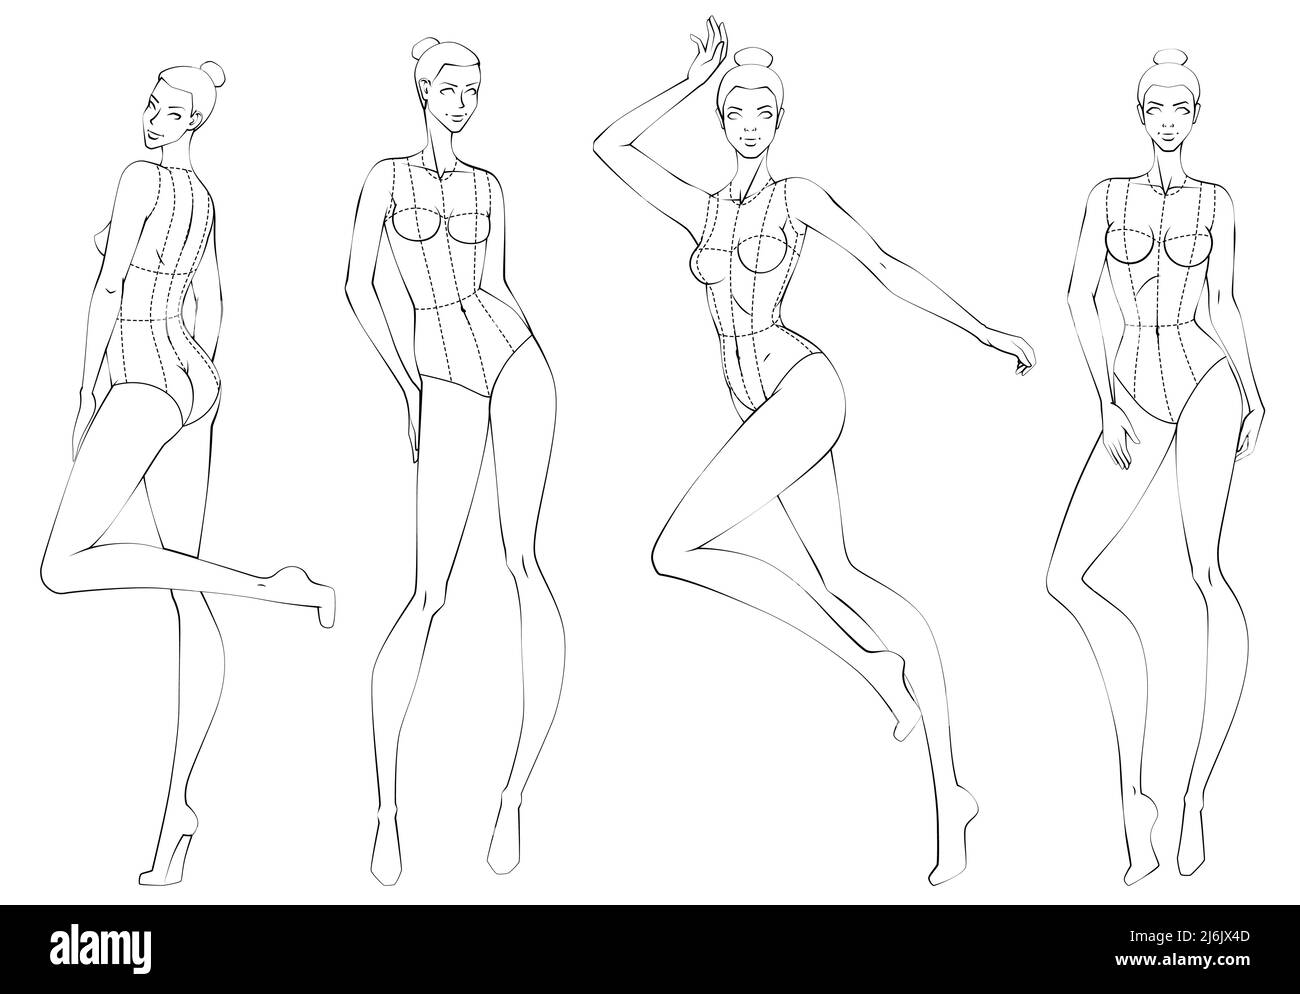 Dress Sketches for Fashion Designing | Fashion Illustration Courses